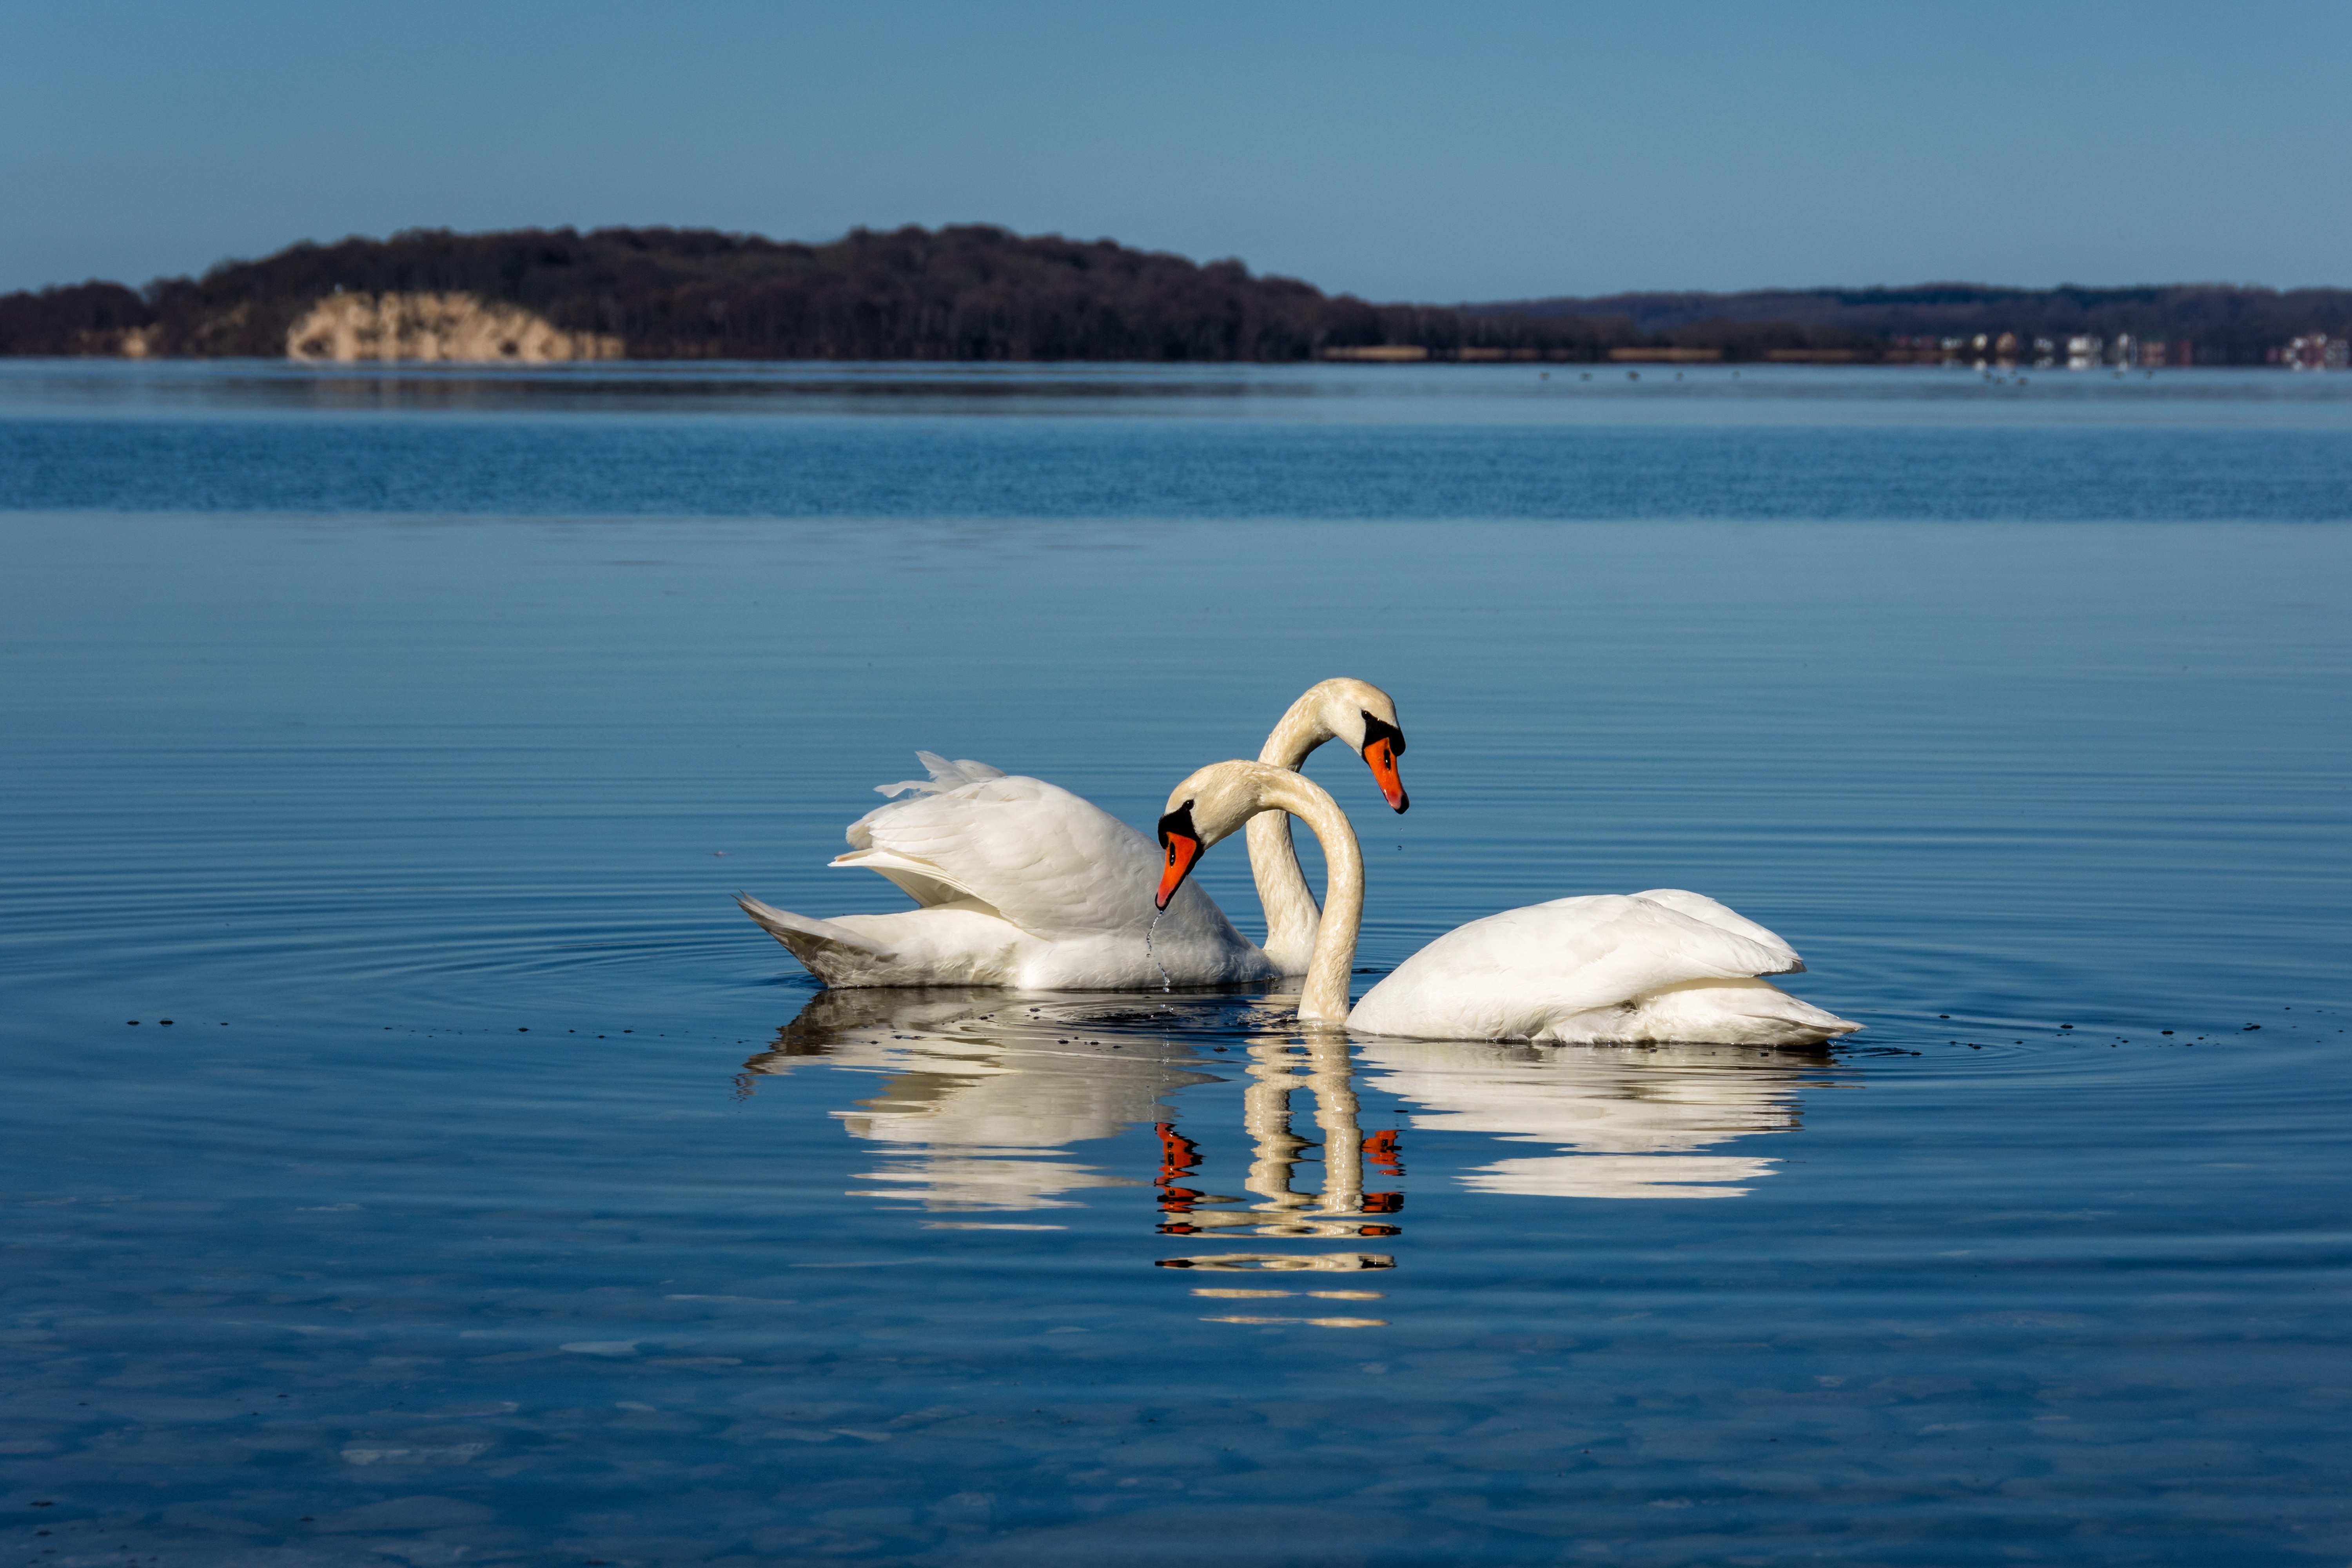 Будет озеро будут лебеди. Озеро Нарочь лебеди. Красивые лебеди. Лебеди на озере. Красивая природа с лебедями.